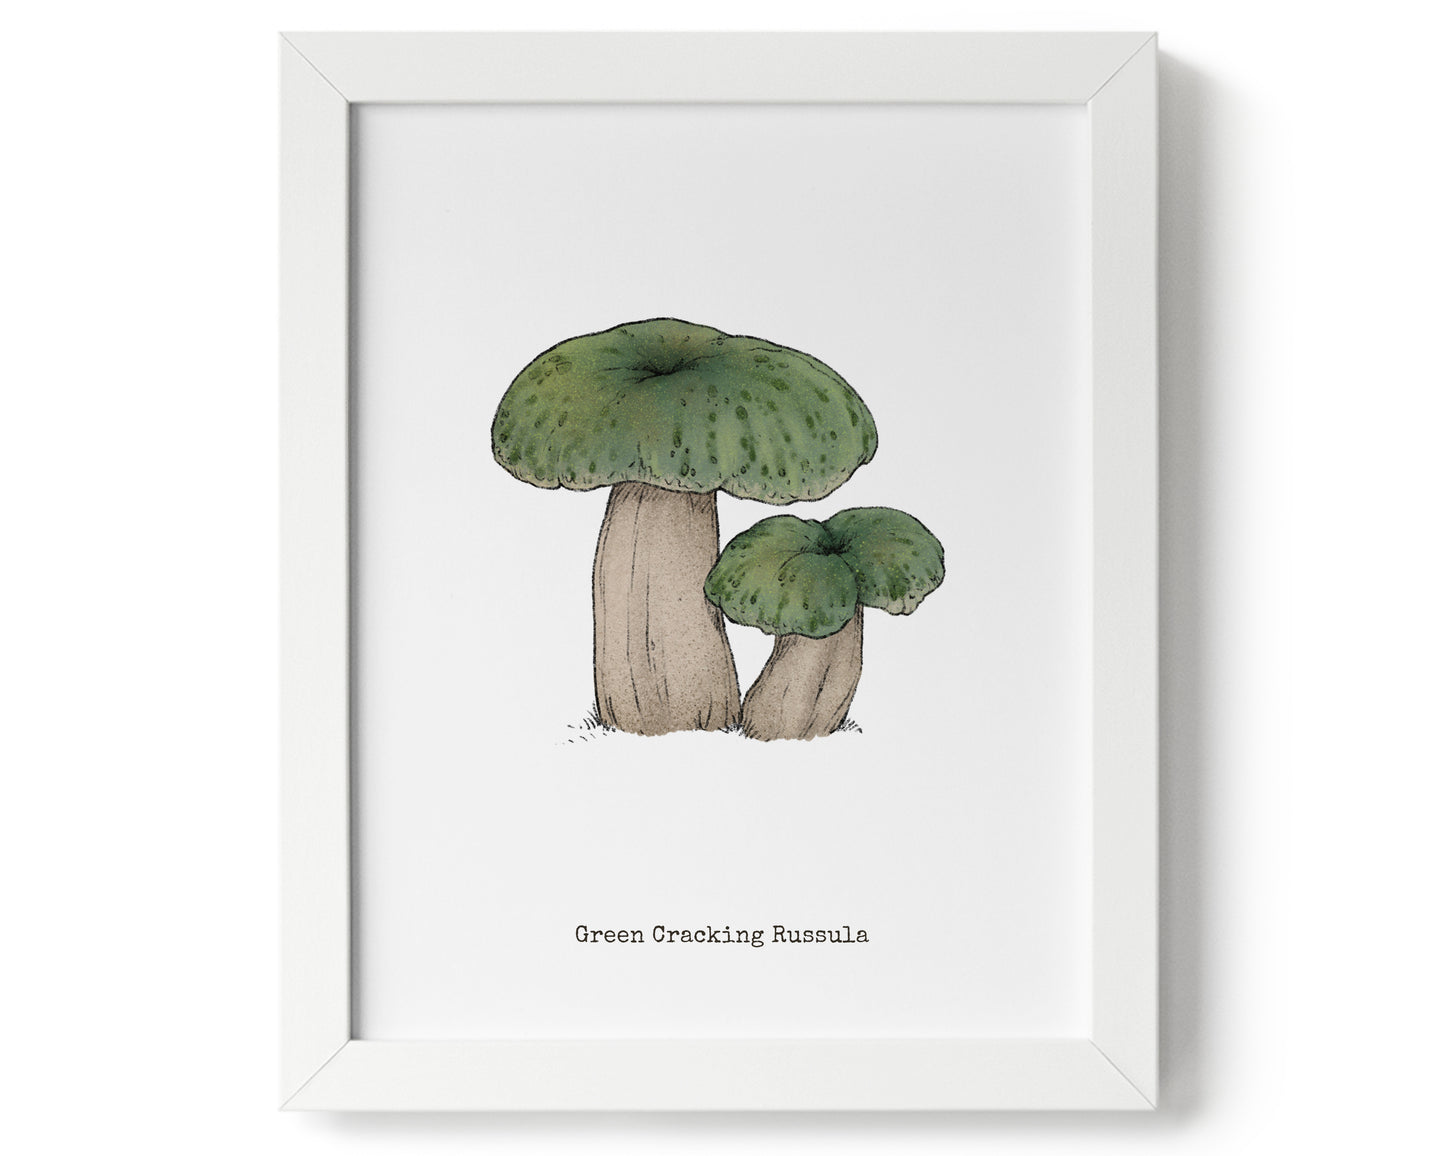 "Green Crackling Russula" by Catherine Hébert - Green Crackling Russula Mushroom Art Print - 8"x10" size